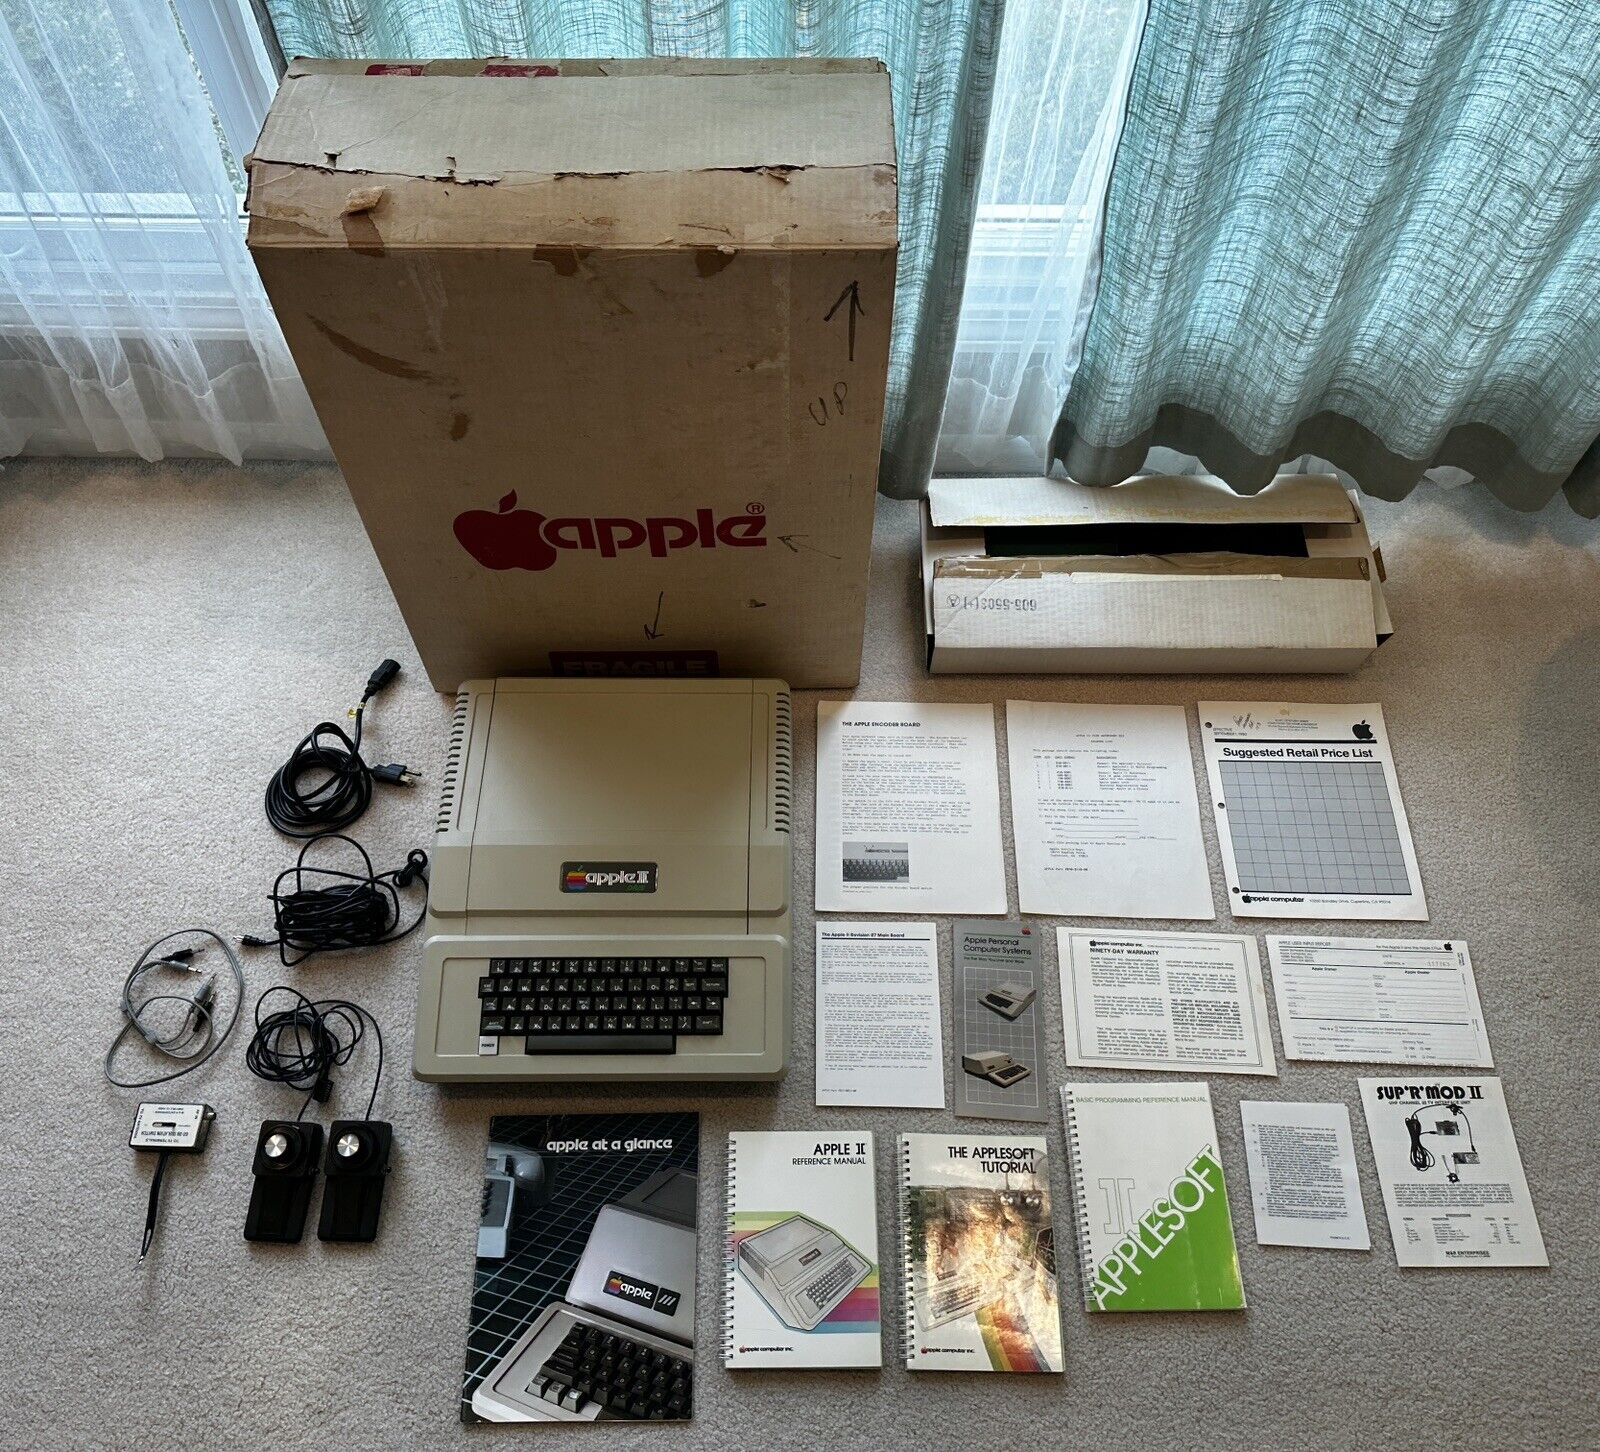 Apple II Plus Computer A2S1048 Rev. 7 - Original Owner - Complete In Box & Mint